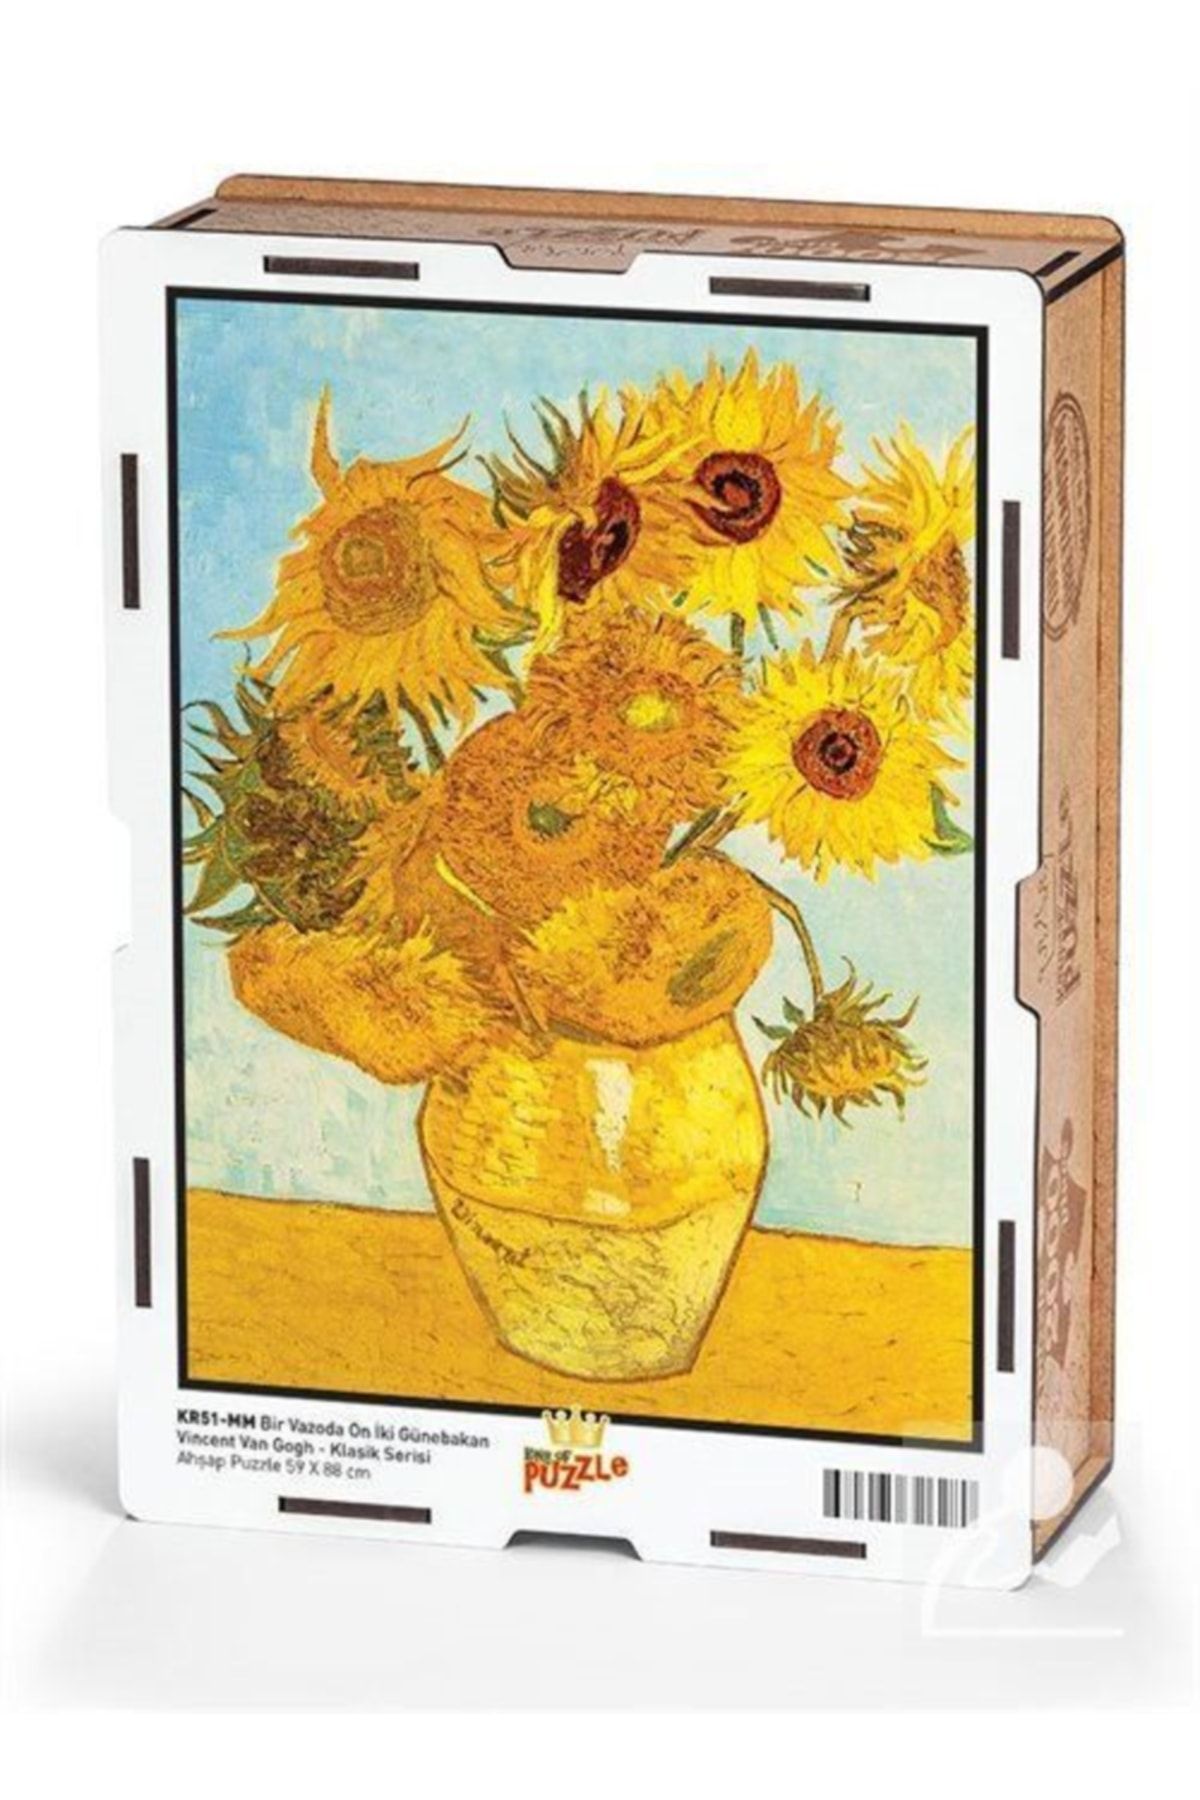 King Of Puzzle Bir Vazoda On Iki Günebakan / Vincent Van Gogh Ahşap Puzzle 2000 Parça (kr51-mm)